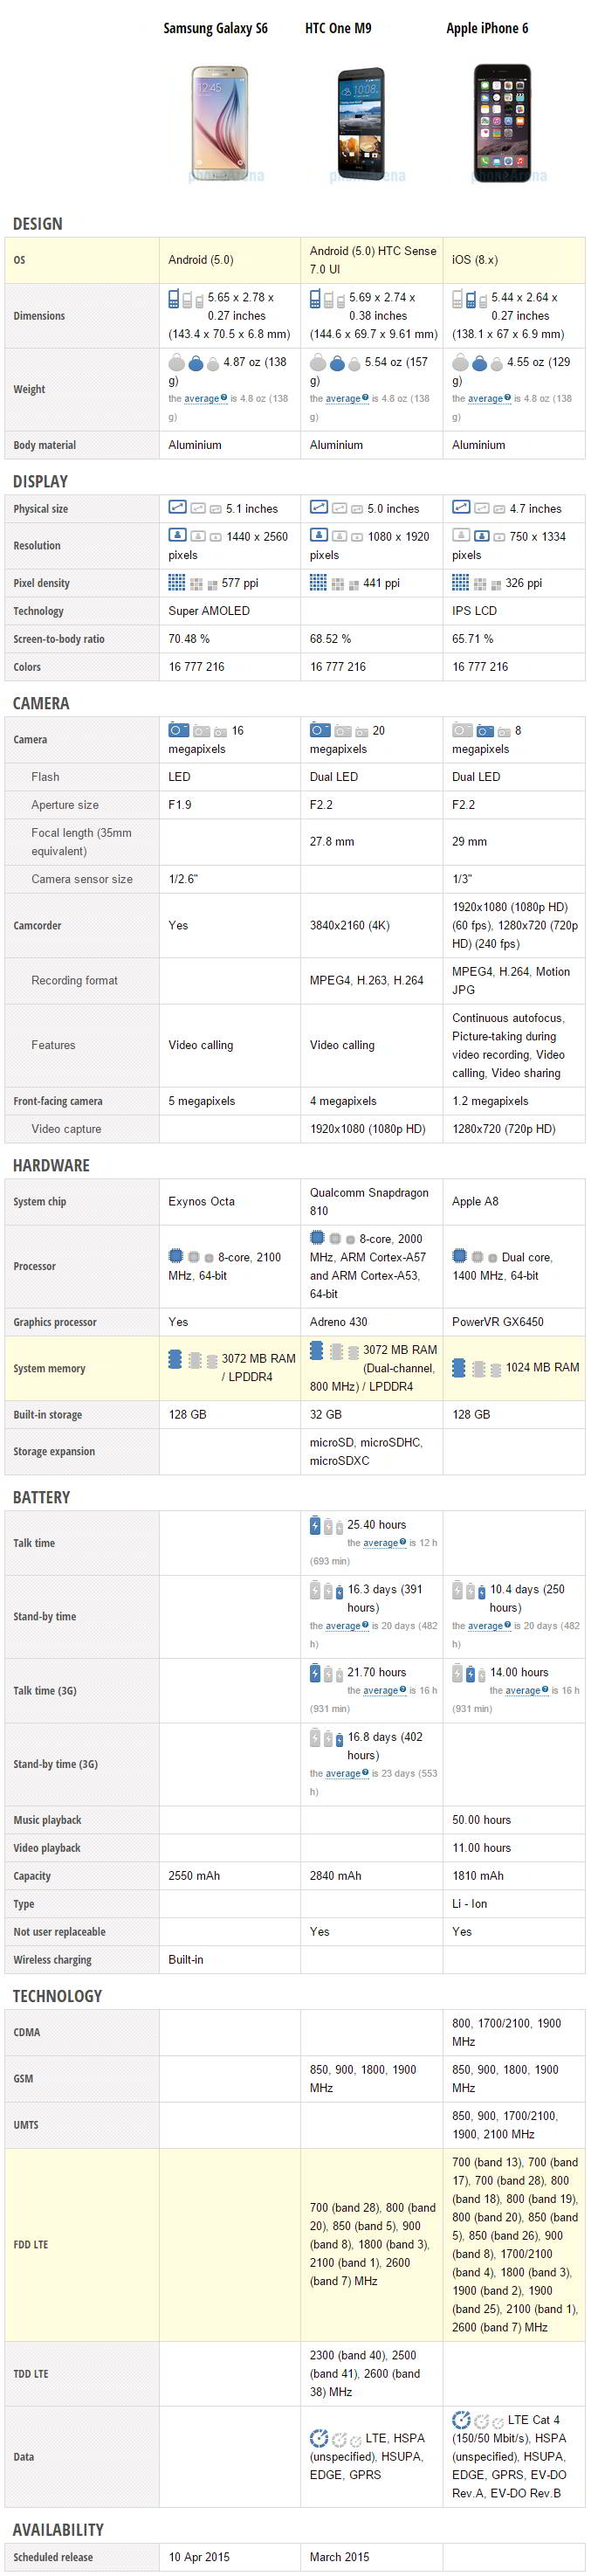 Samsung Galaxy S6 vs HTC One M9 vs Apple iPhone 6  specs comparison